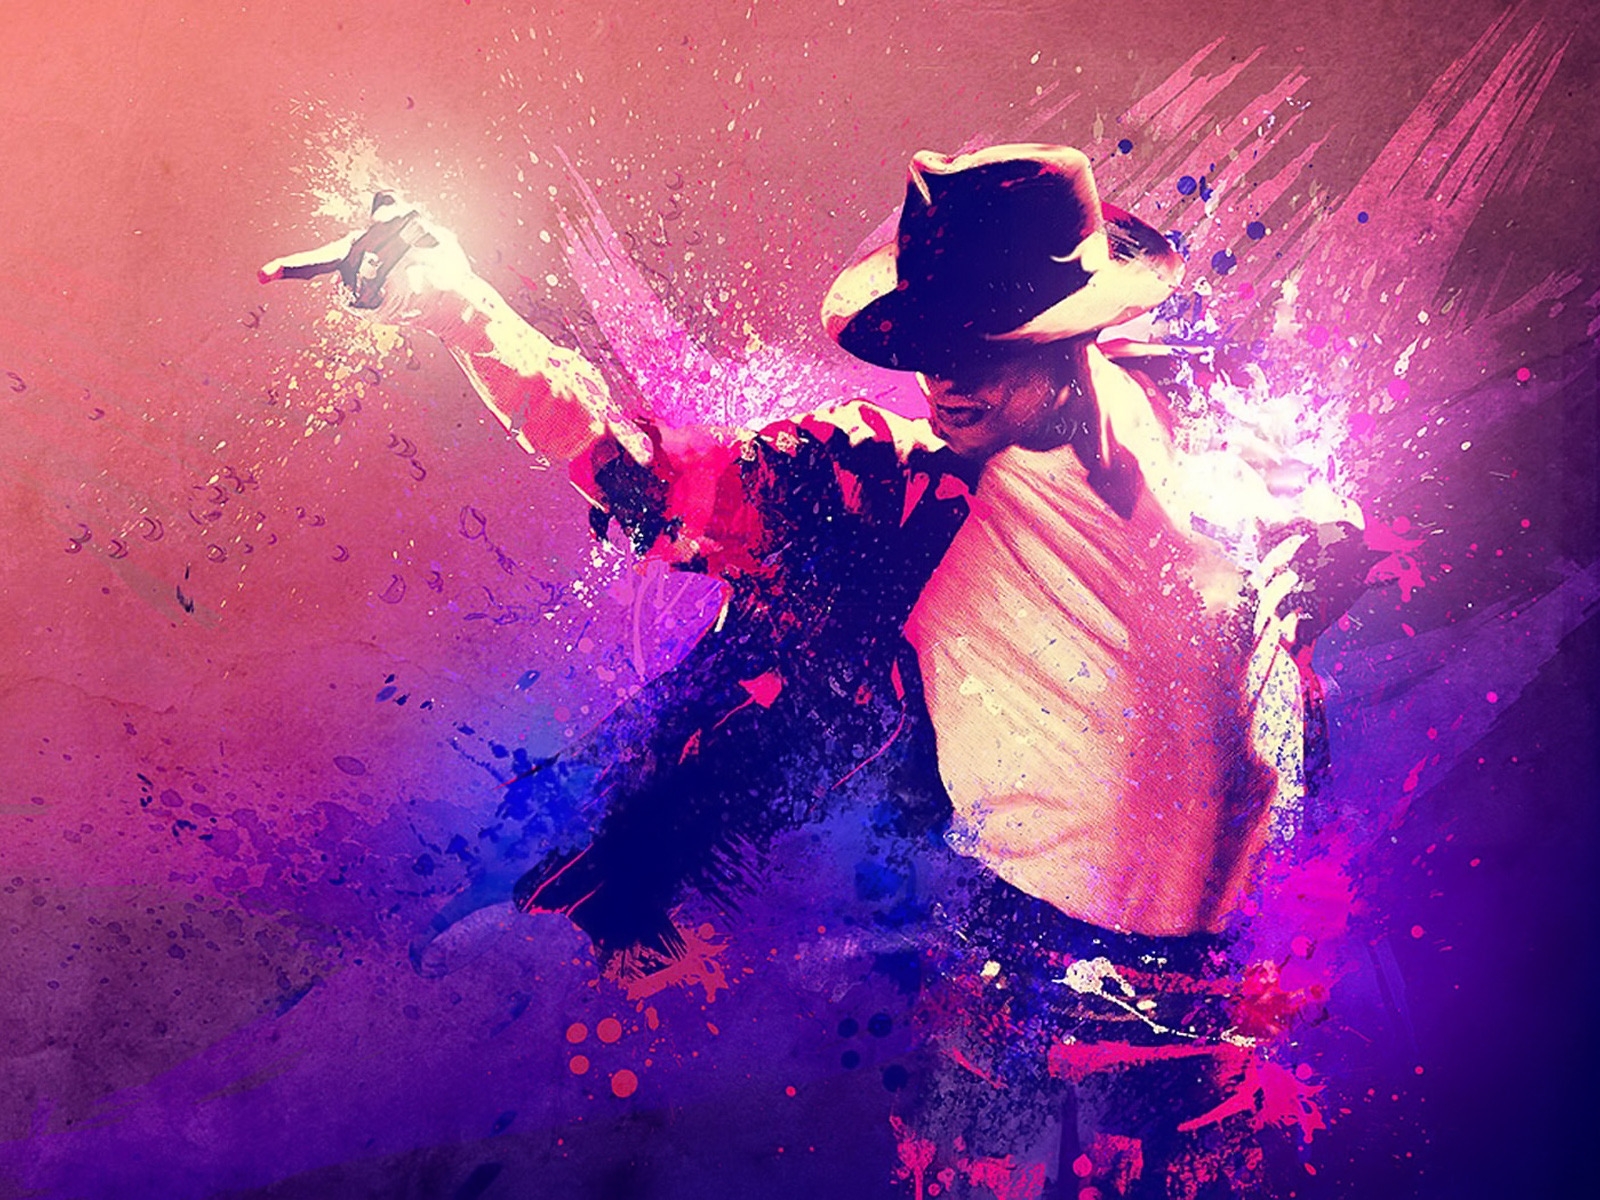 Michael Jackson Fanart for 1600 x 1200 resolution